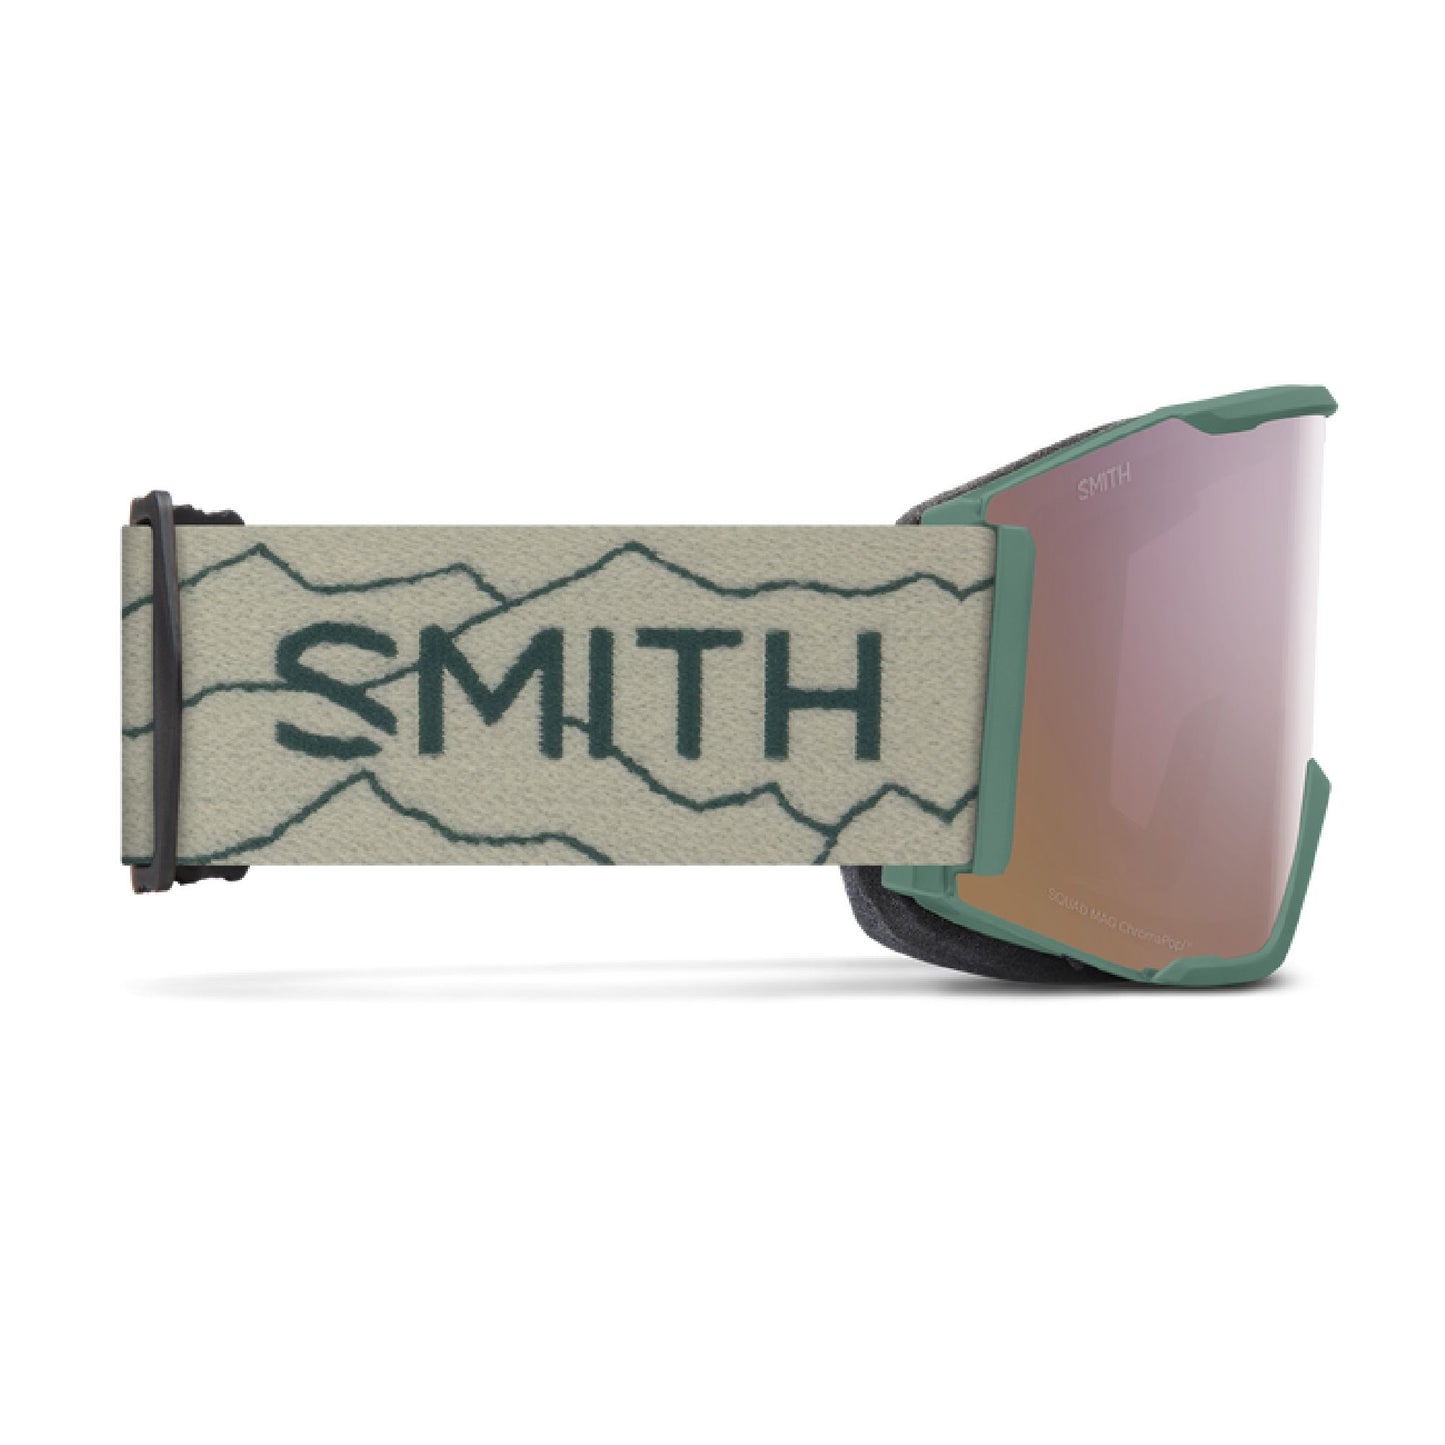 Smith Squad MAG Low Bridge Fit Snow Goggle AC | Elena Hight ChromaPop Everyday Rose Gold Mirror Snow Goggles